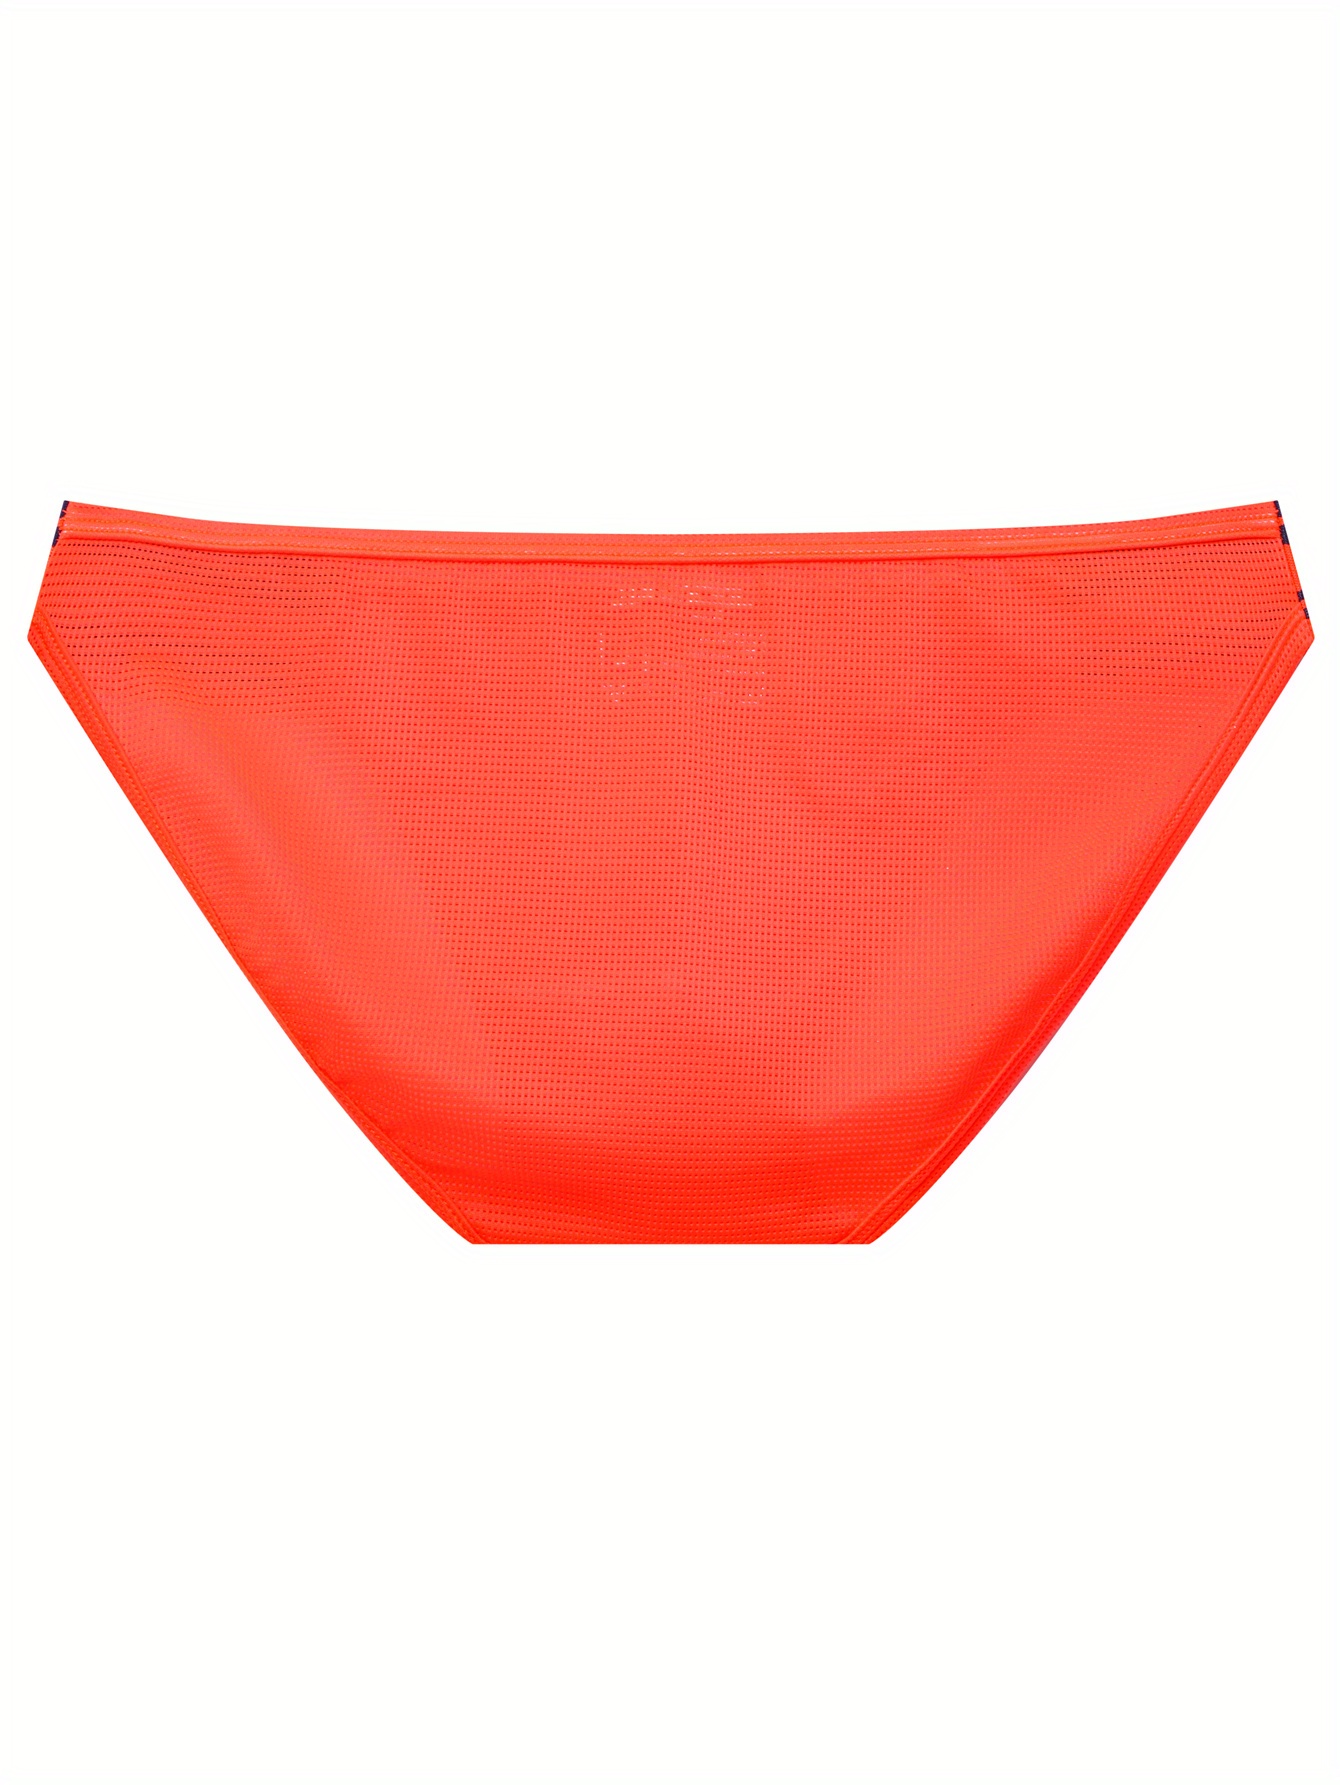 Toot Renew MESH Men's Underwear, Orange, Orange, Large : :  Clothing, Shoes & Accessories